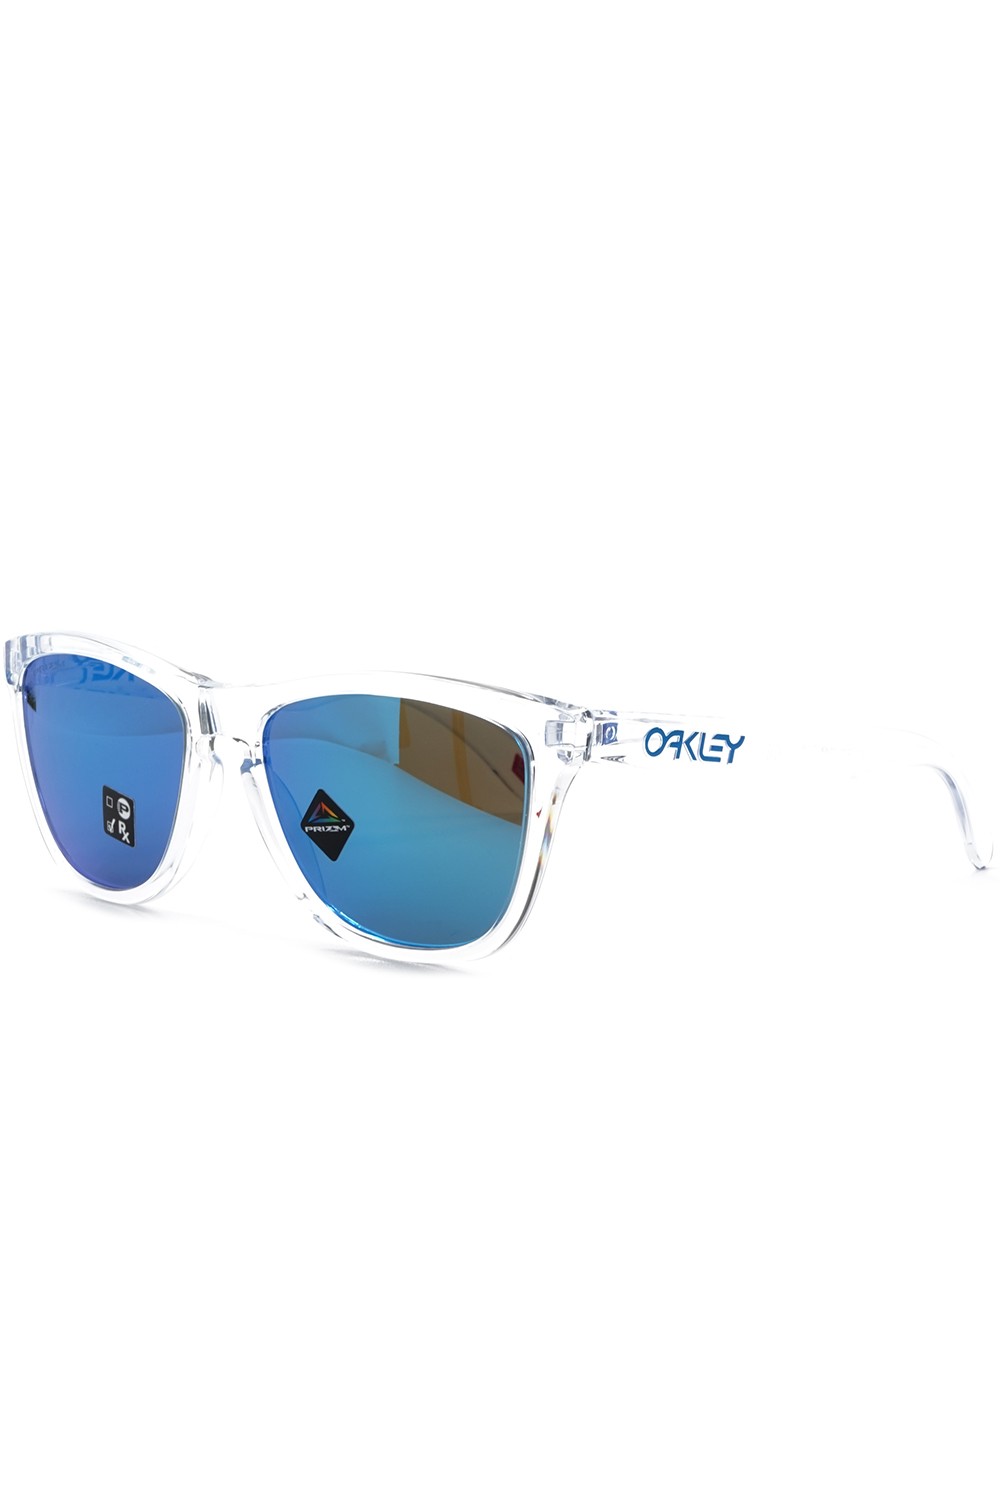 Oakley - Occhiali da sole sportivi squadrati unisex trasparente - OO9013 D055